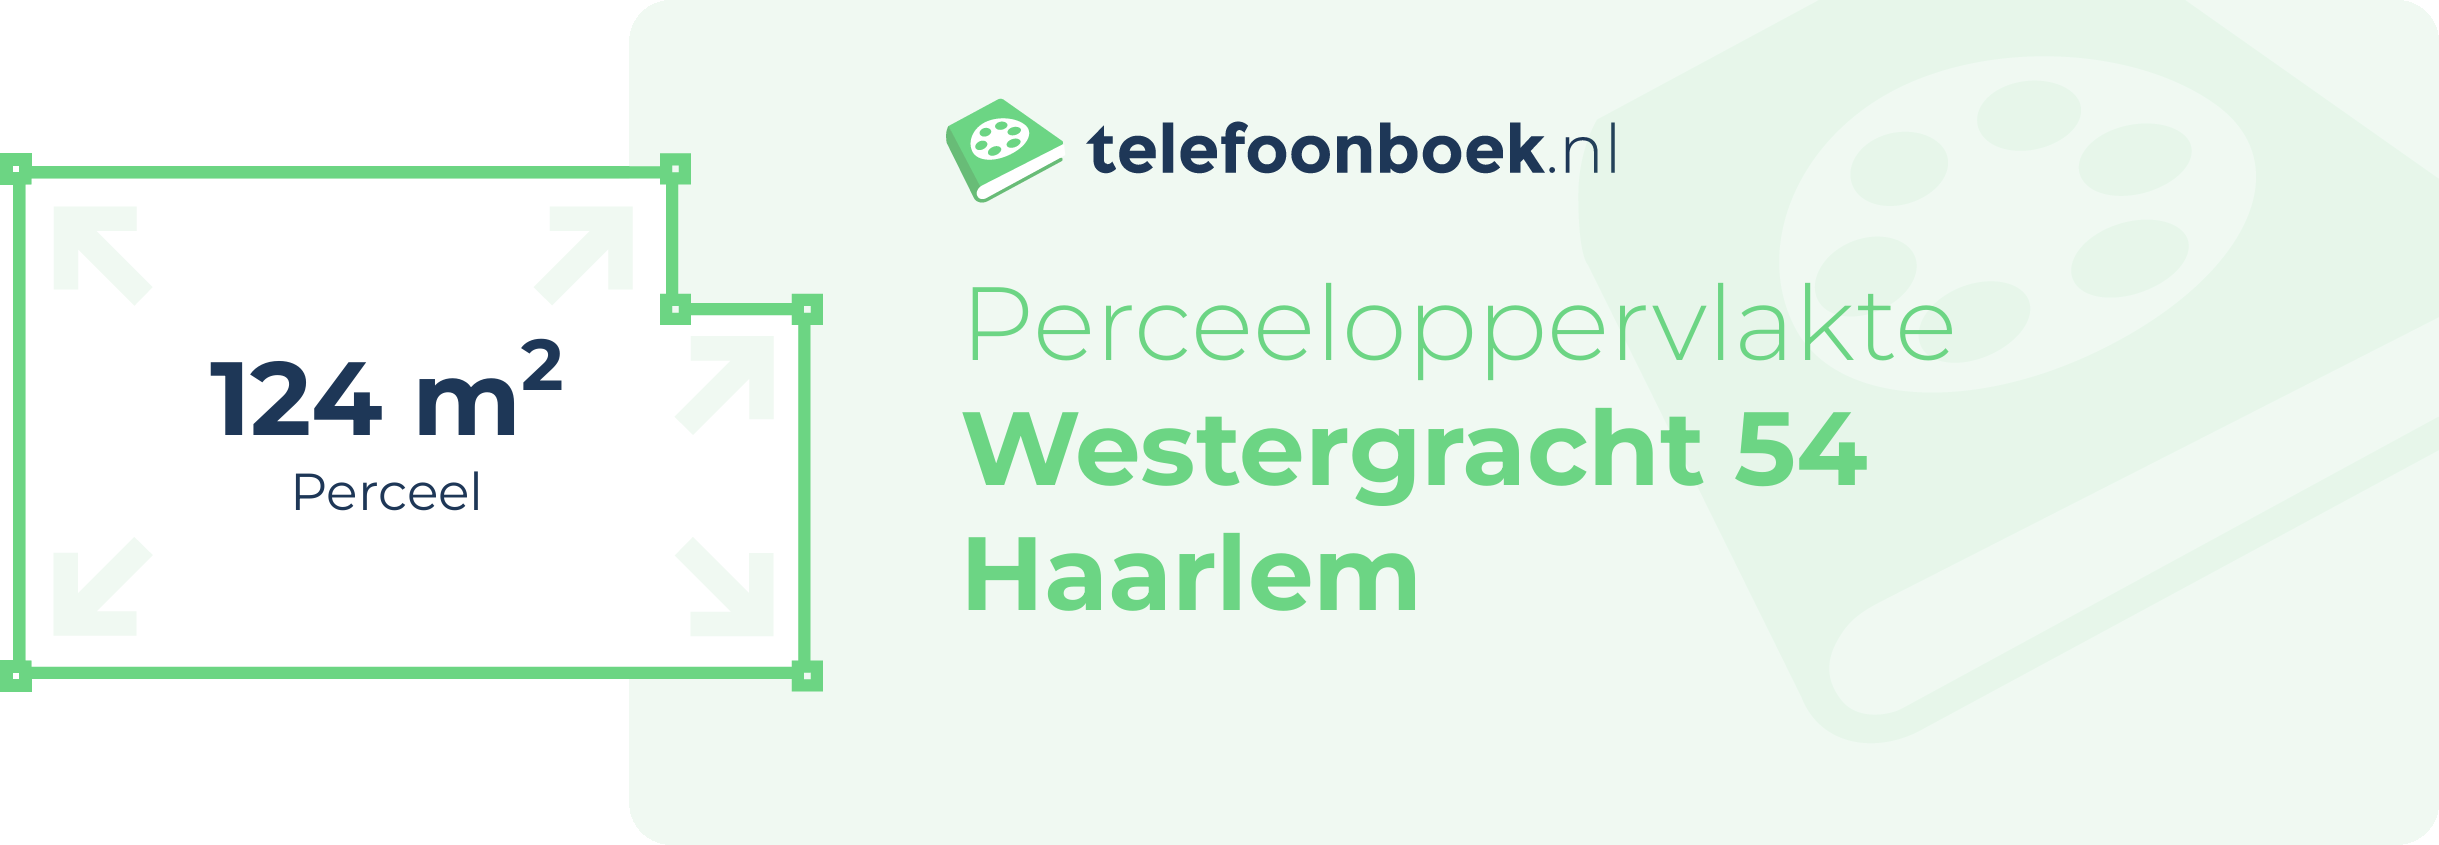 Perceeloppervlakte Westergracht 54 Haarlem